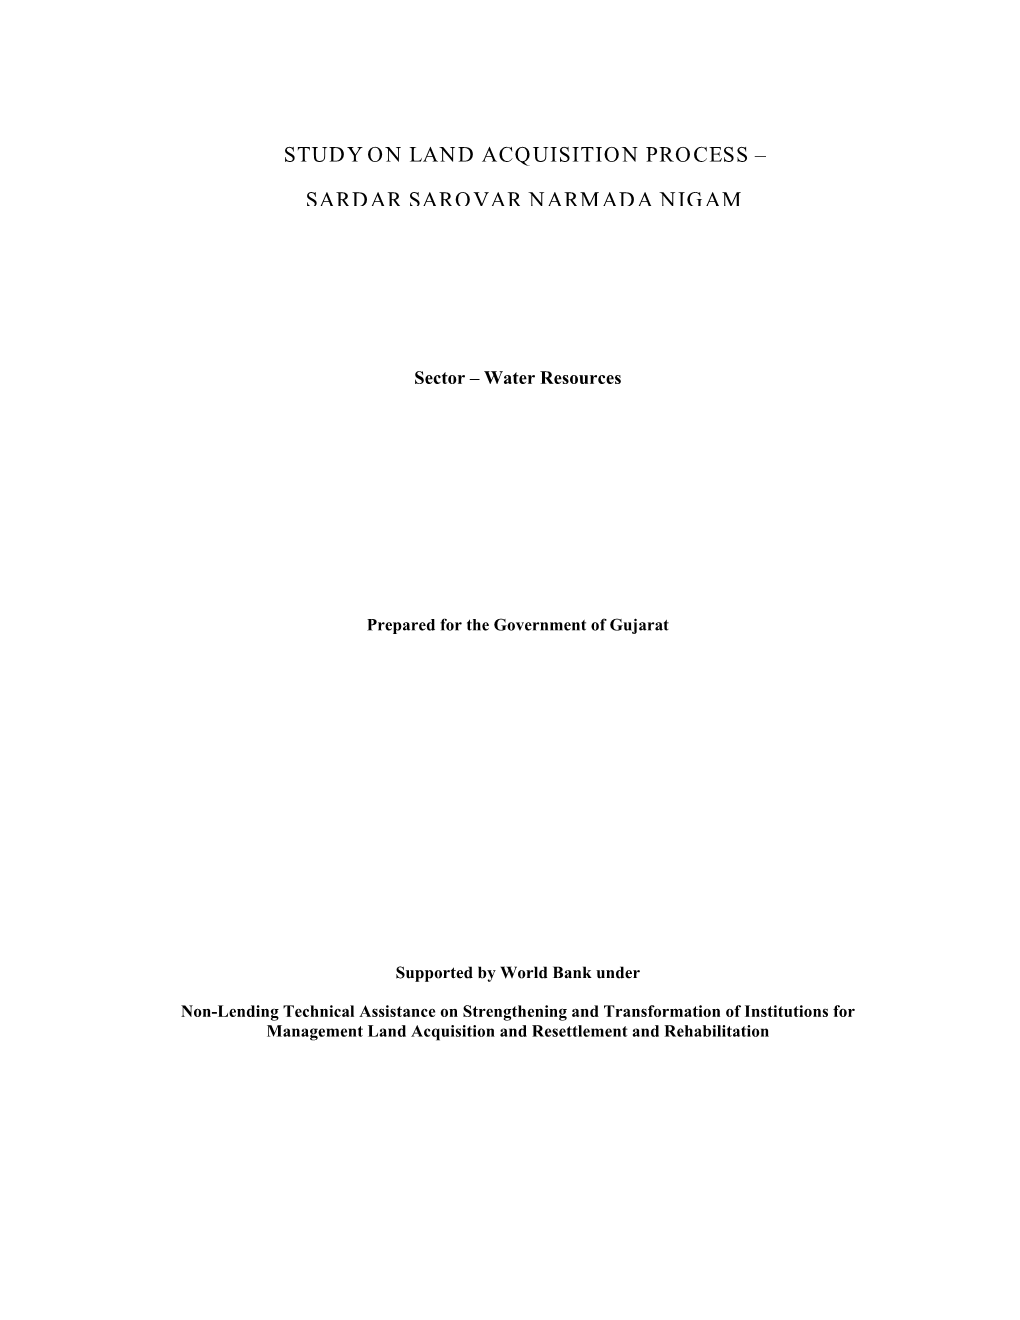 Study on Land Acquisition Process – Sardar Sarovar